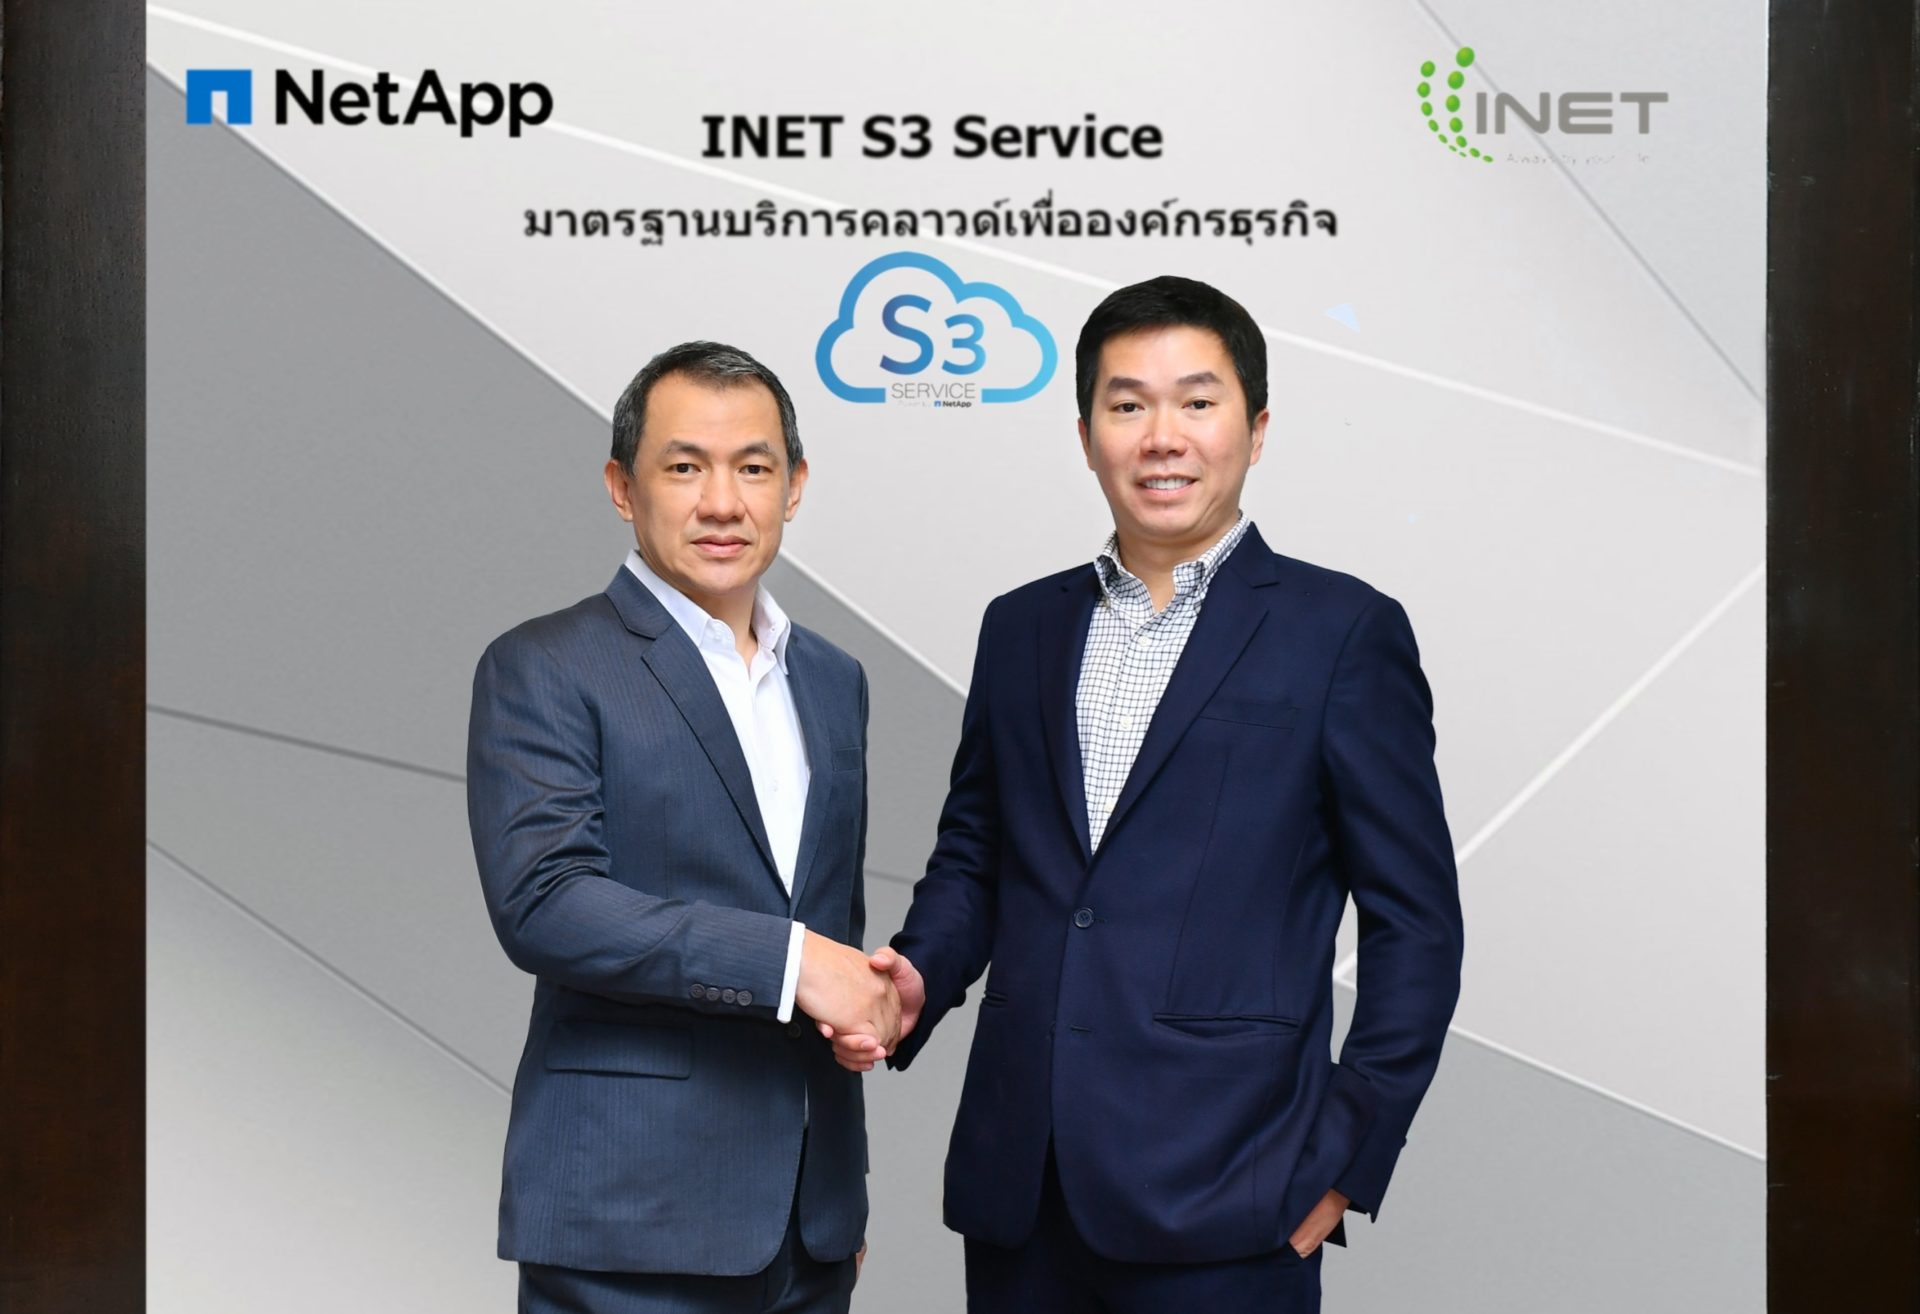 “INET ร่วมมือ NetApp” เสริมศักยภาพบริการคลาวด์ด้วย “NetApp Object-Based Storage”